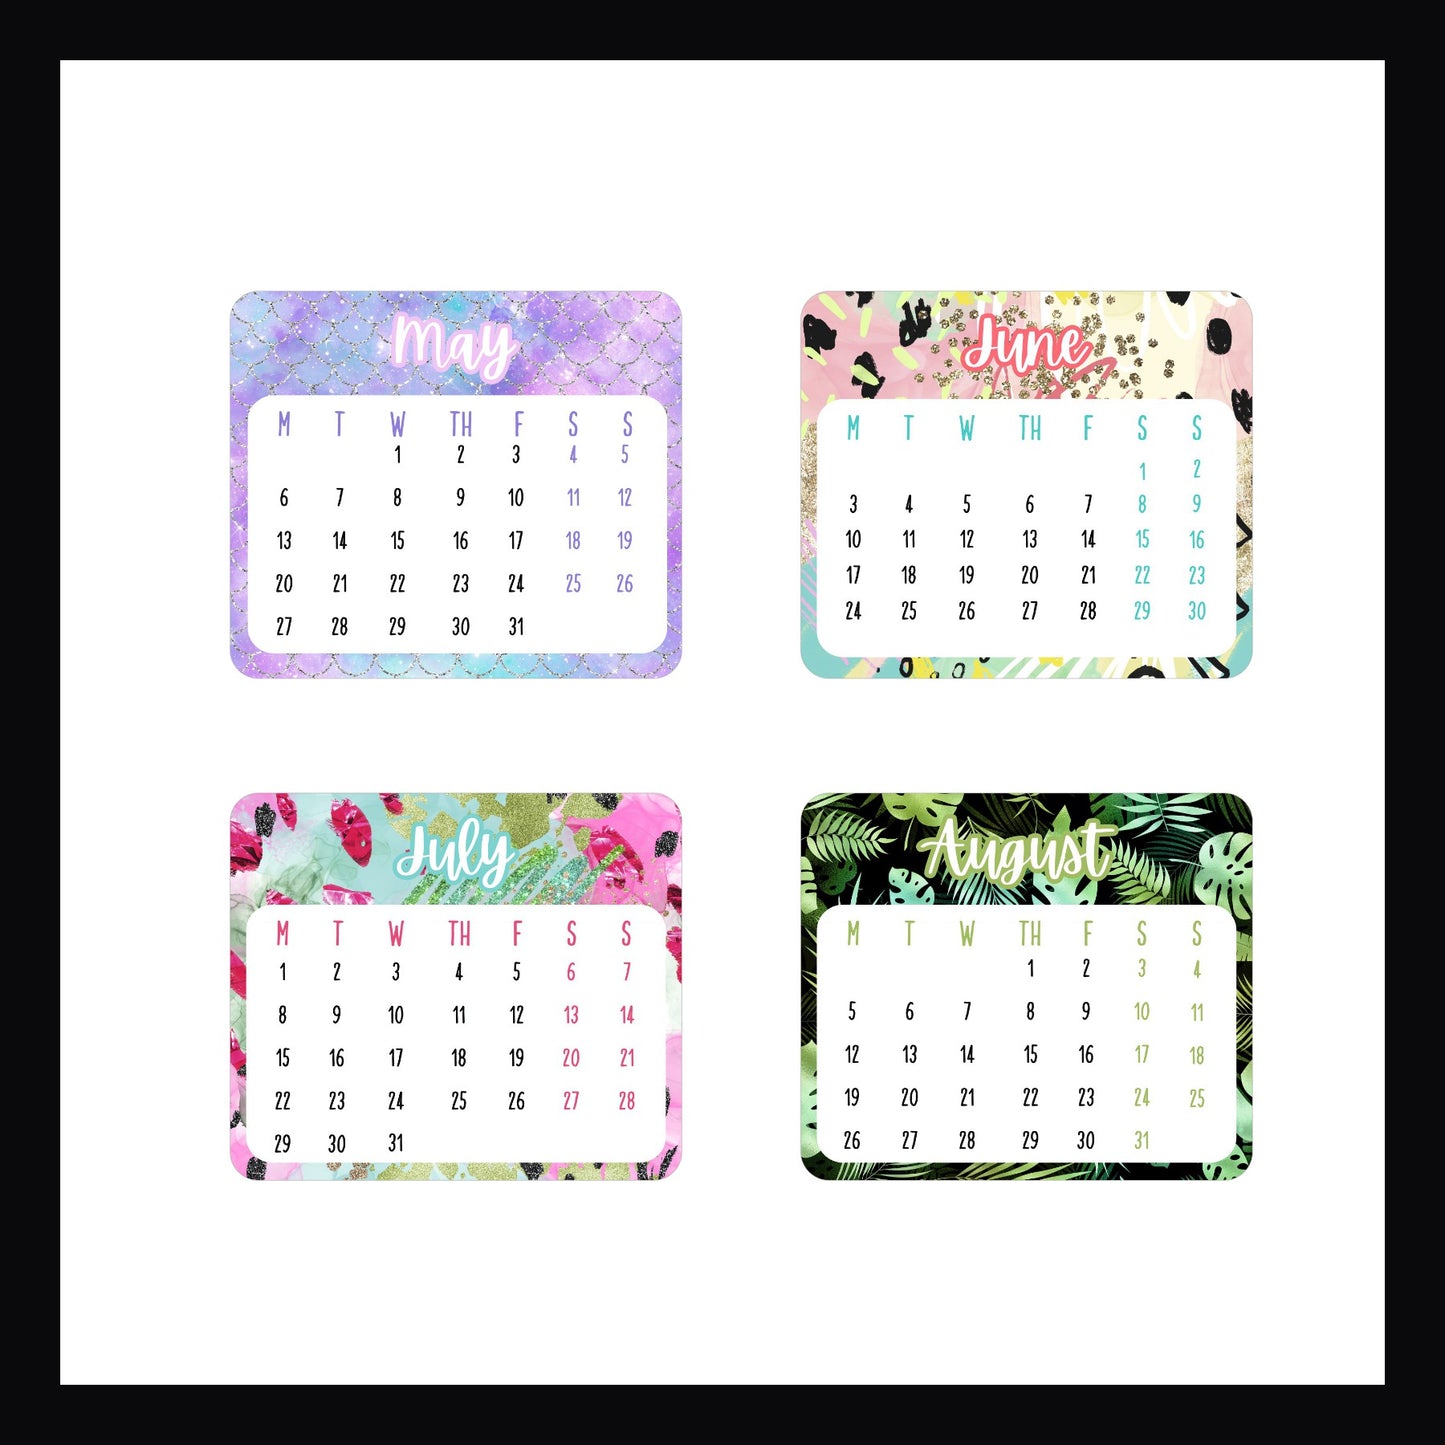 May, June, July, August mini calendar stickers, die cut stickers, Monday start, mini calendars